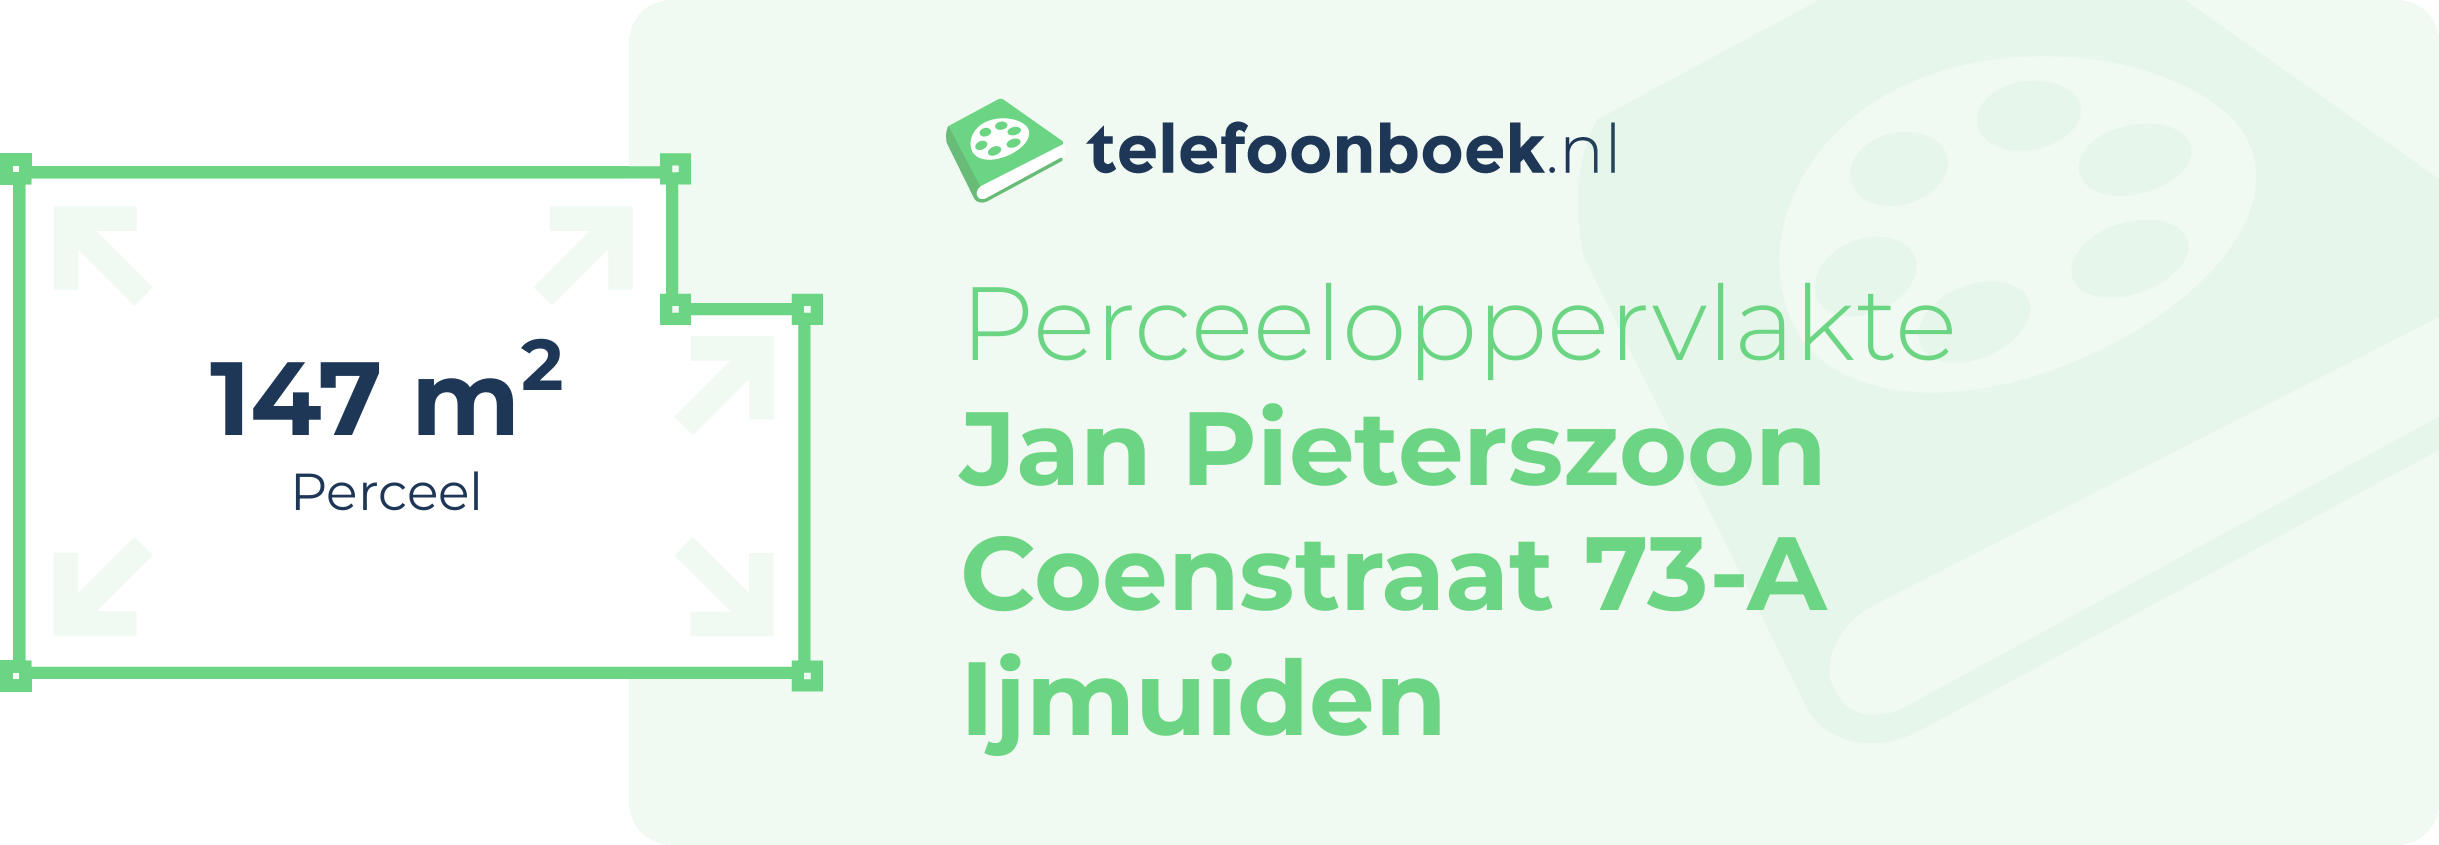 Perceeloppervlakte Jan Pieterszoon Coenstraat 73-A Ijmuiden